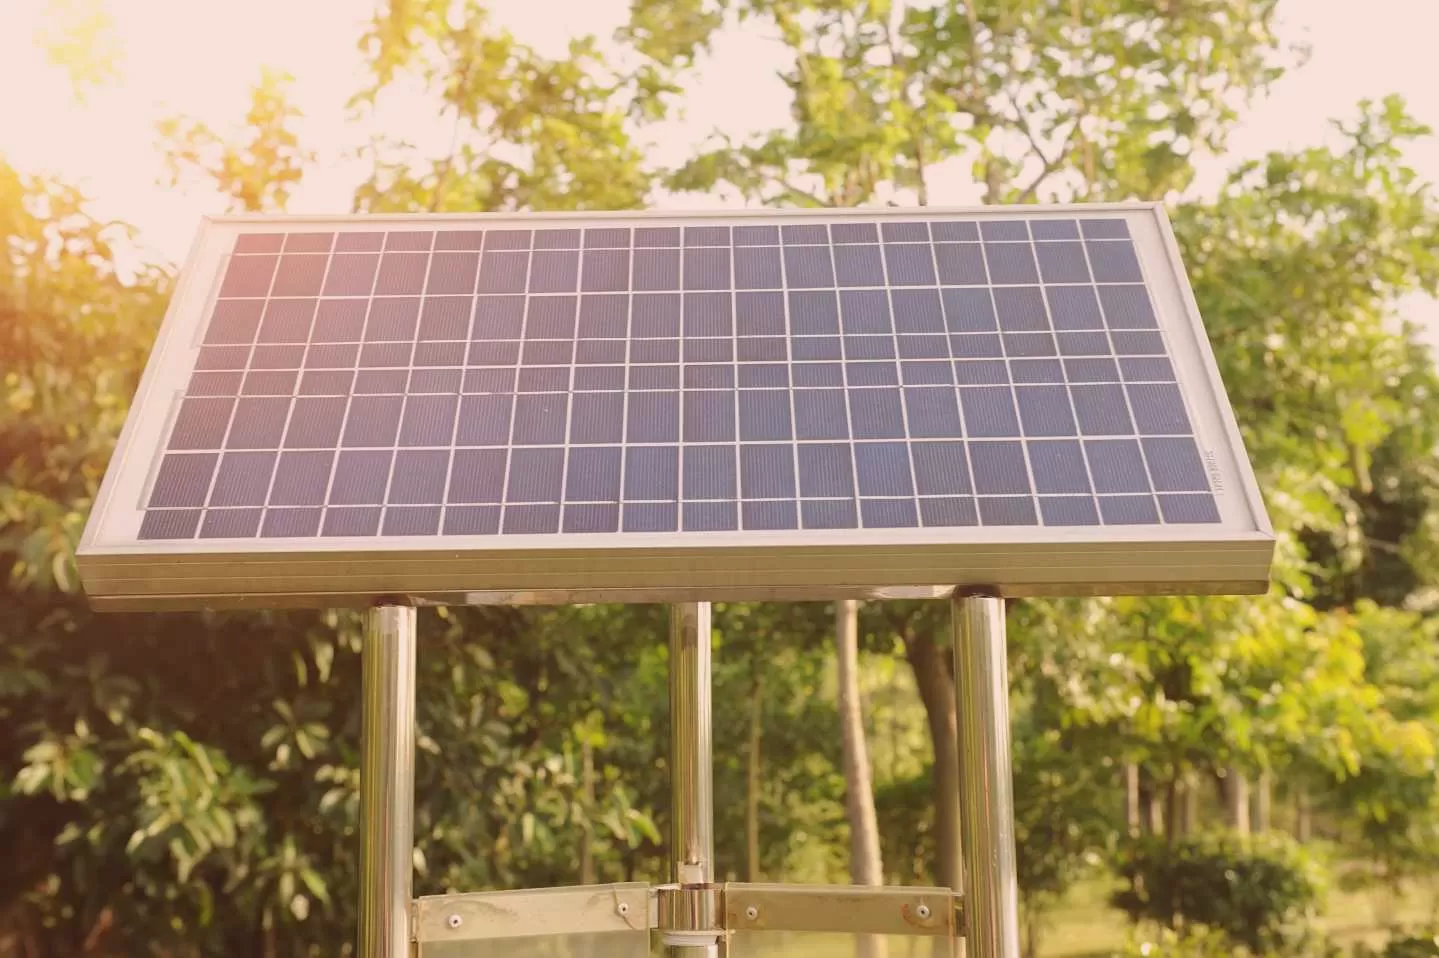 beem energy kits solaires installation prix et avis.webp